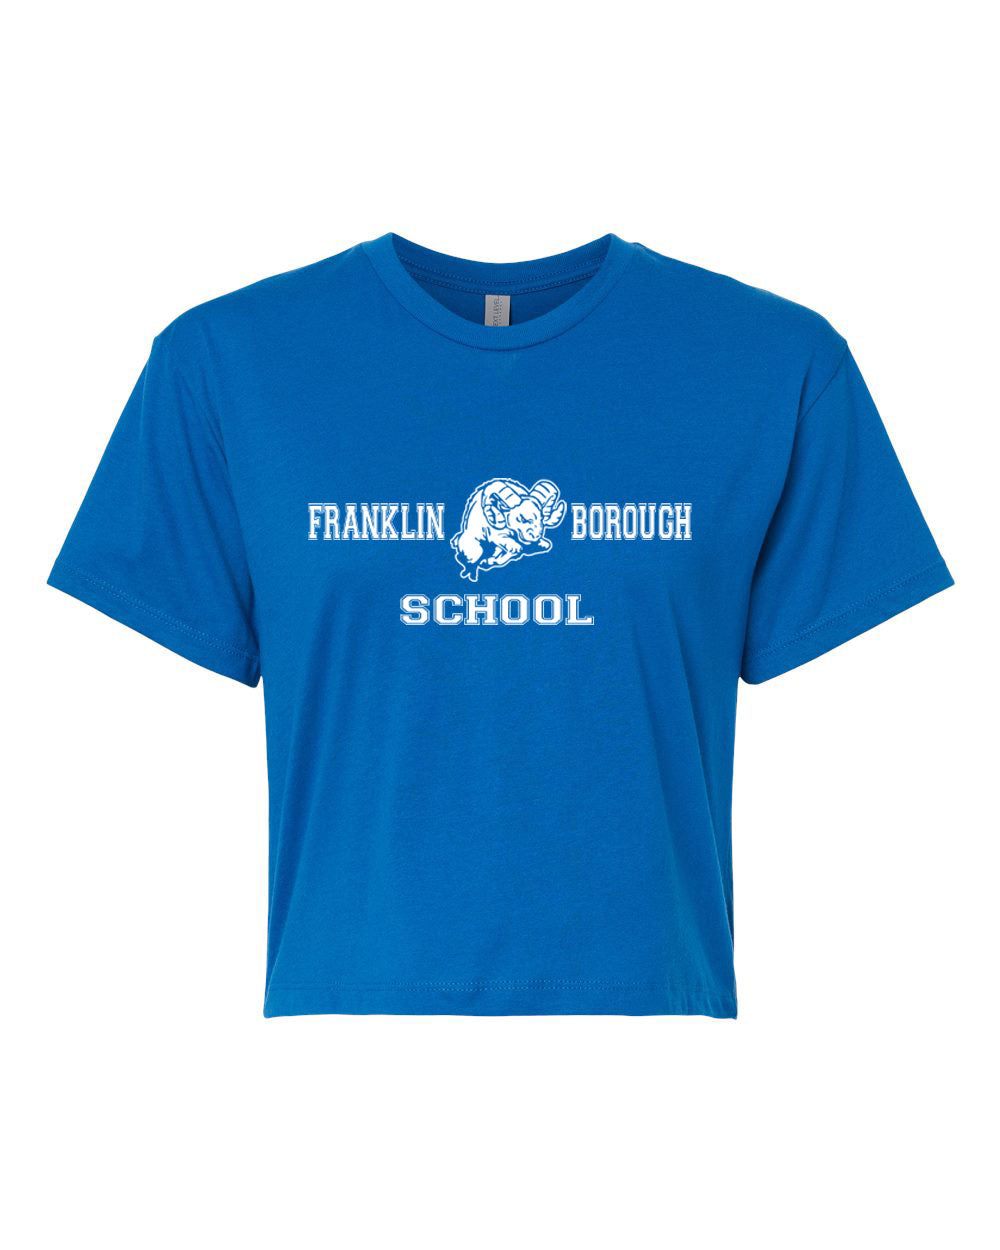 Franklin School design 3 Crop Top